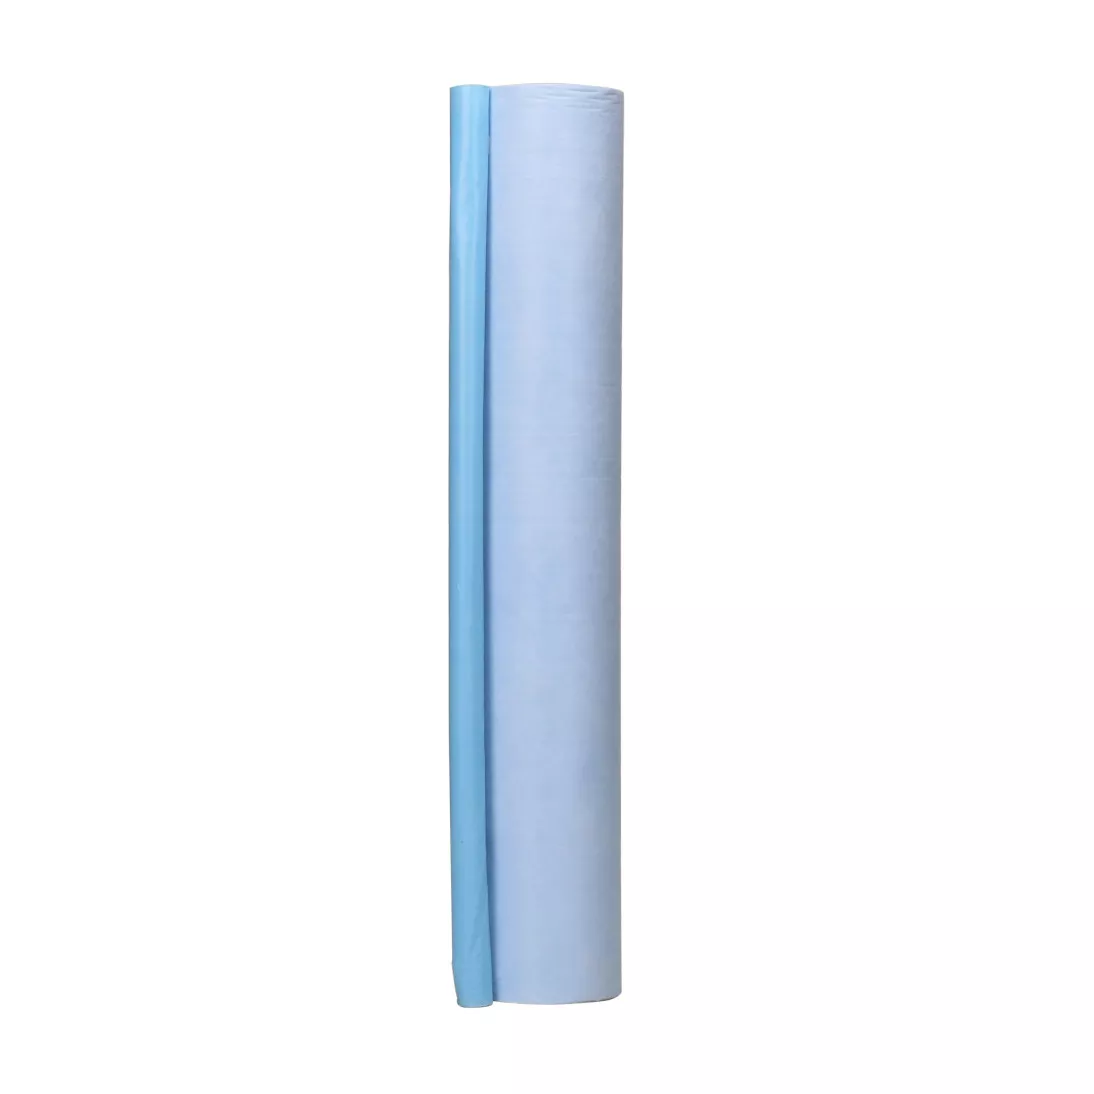 3M™ Self-Stick Liquid Protection Fabric, 36882, Blue, 56 in x 300 ft, 1
roll per case